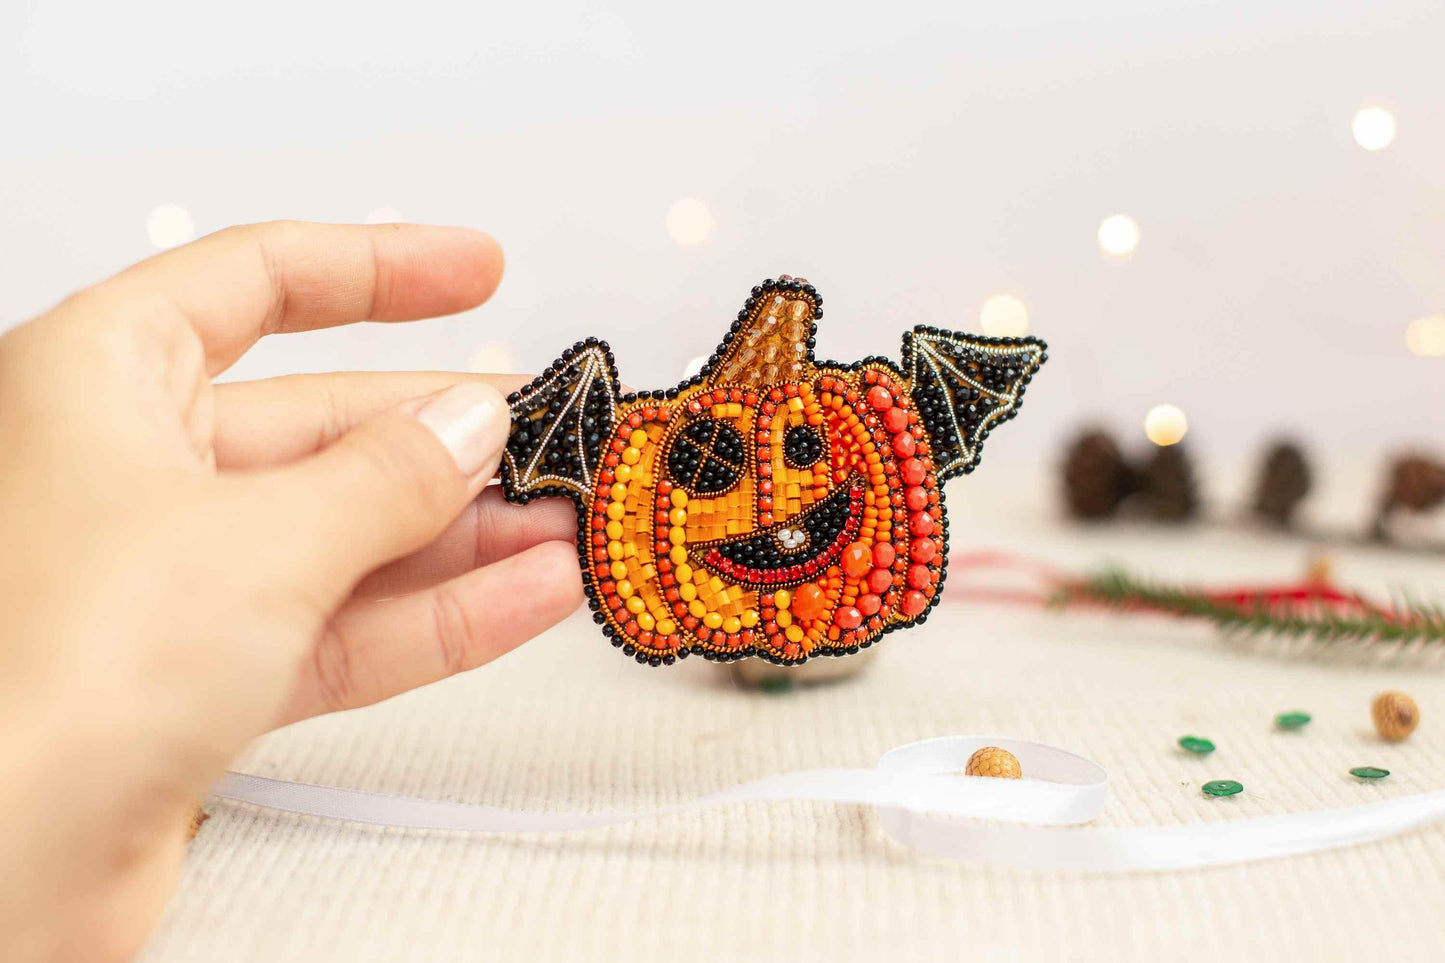 Set of 3 Halloween DIY Beaded Brooches Kits, Craft kits, Beaded Pumpkin Brooches, Jewelry Making Kits for Adults, Bead embroidery kits